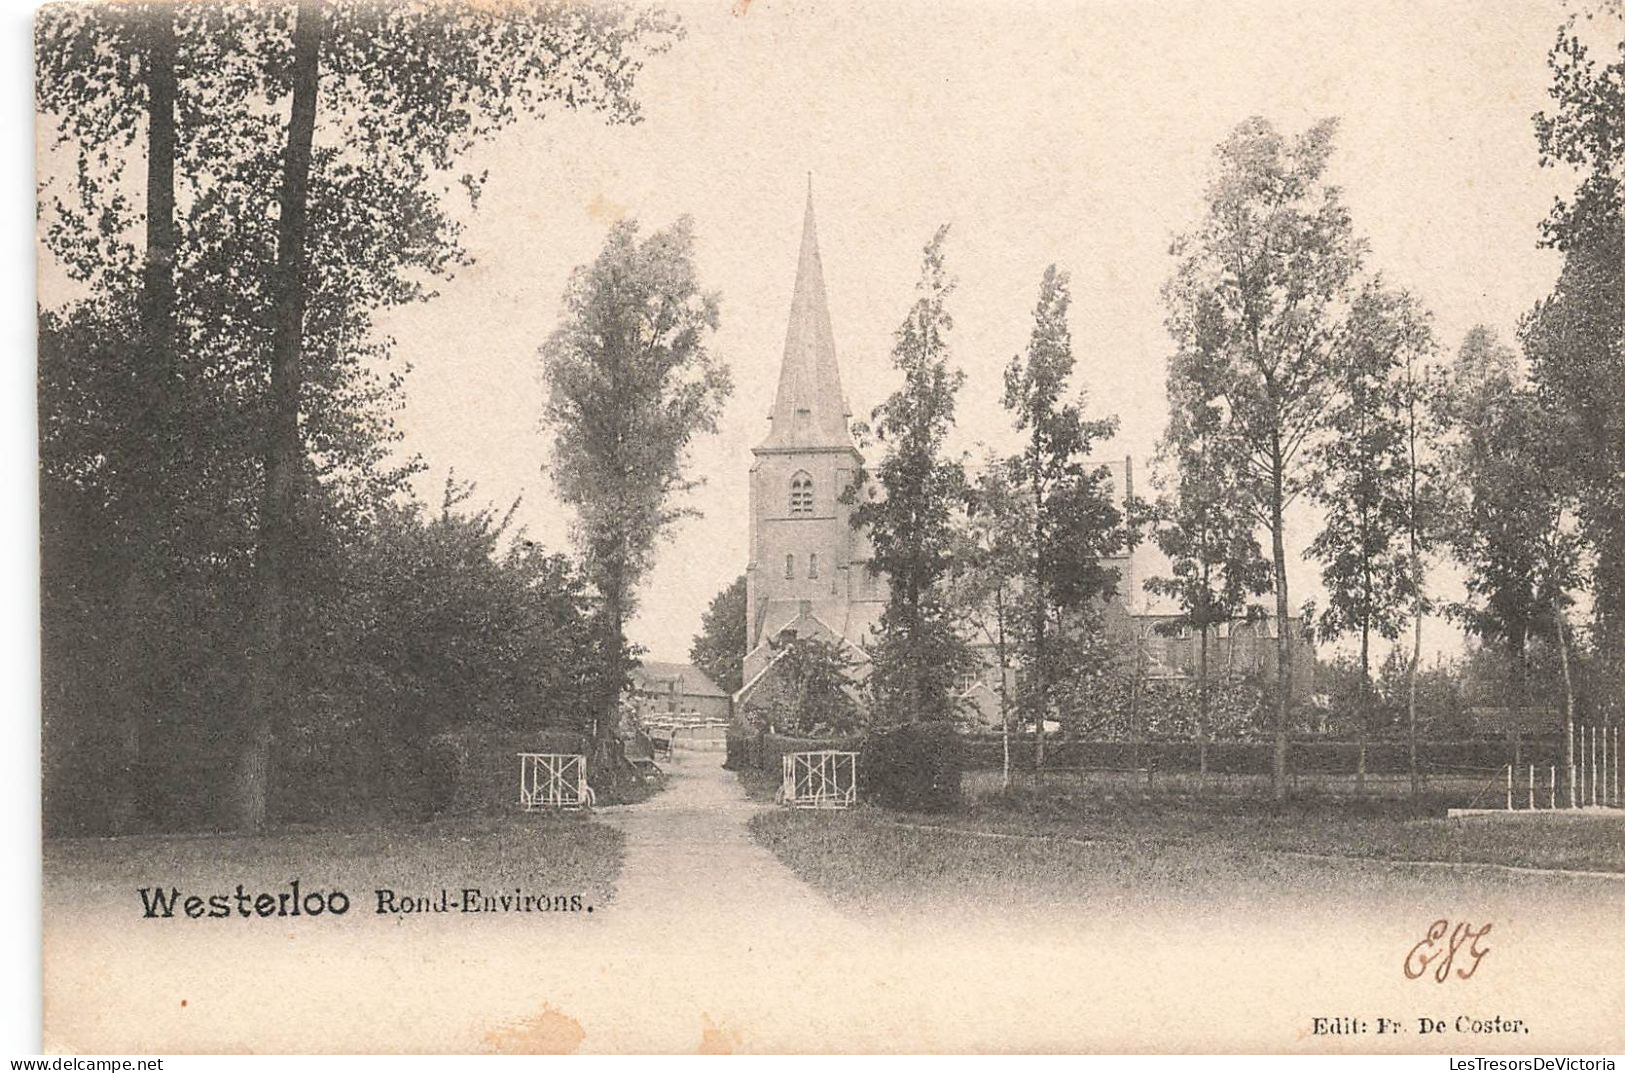 Belgique - Westerloo - Rond Environs - Edit. Fr De Coster - Clocher -  Carte Postale Ancienne - Turnhout